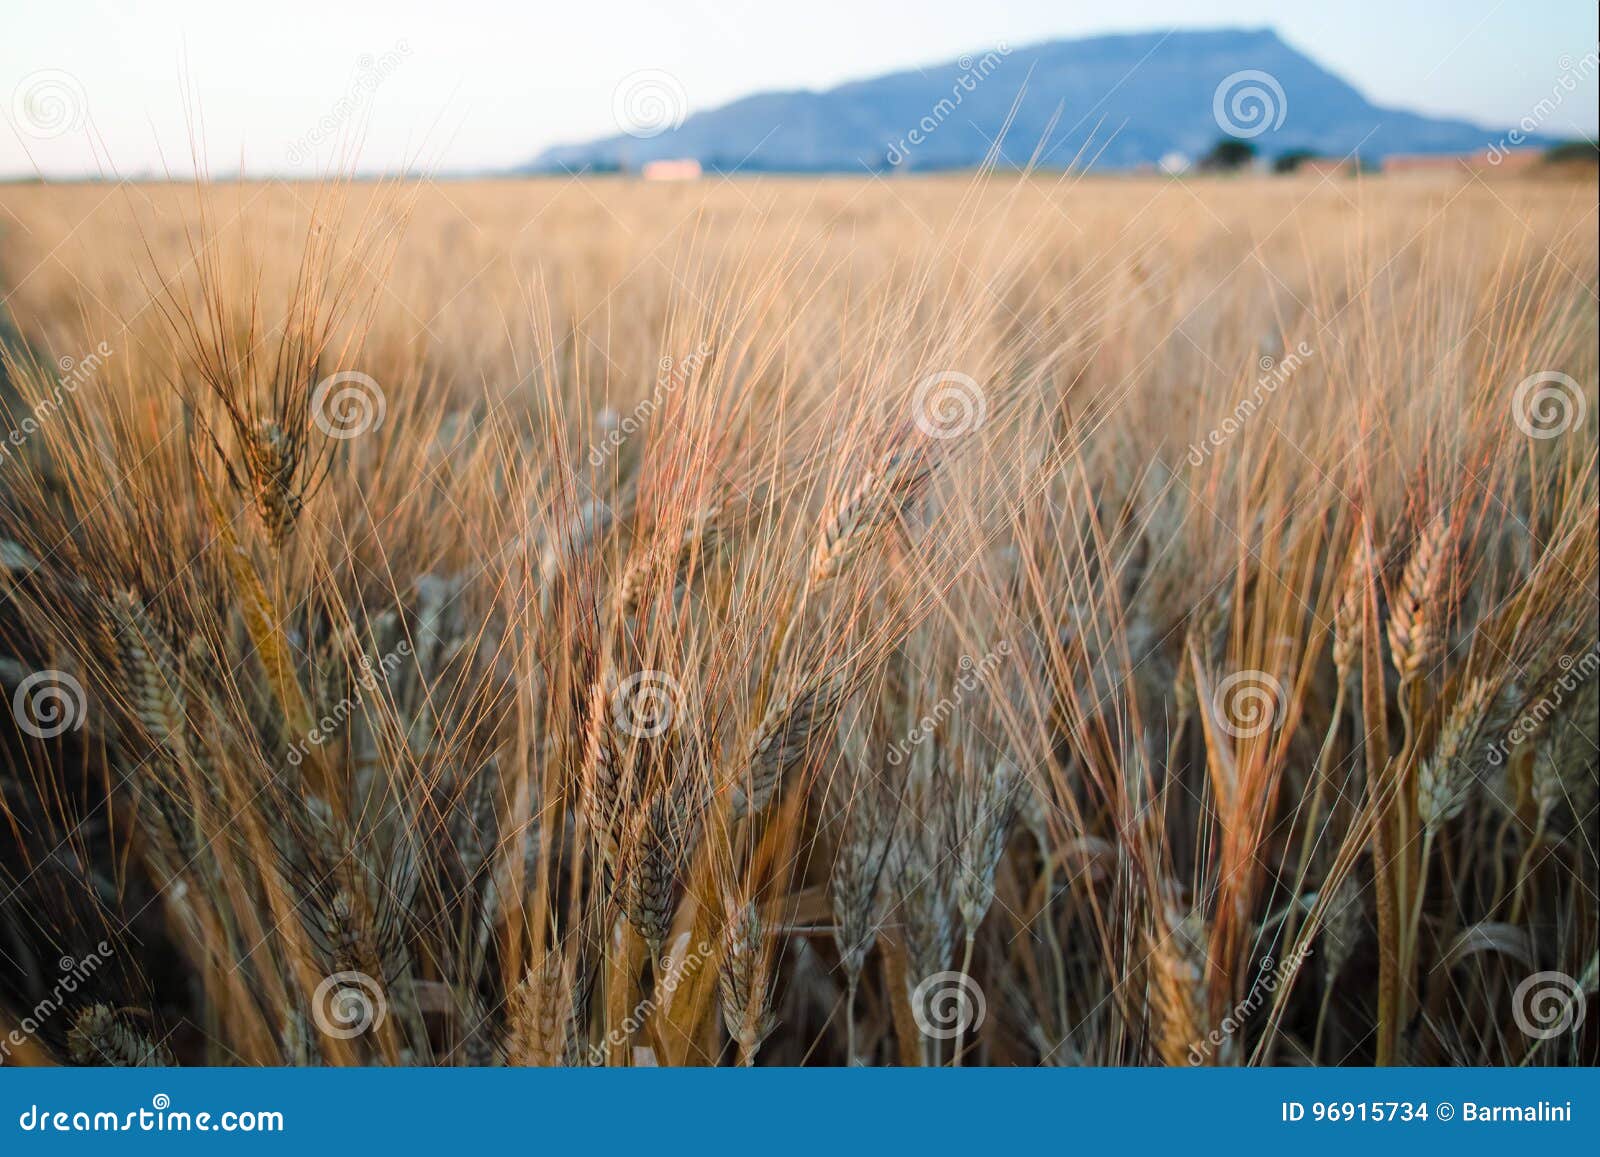 yellow fields with ripe hard wheat, grano duro, sicily, italy